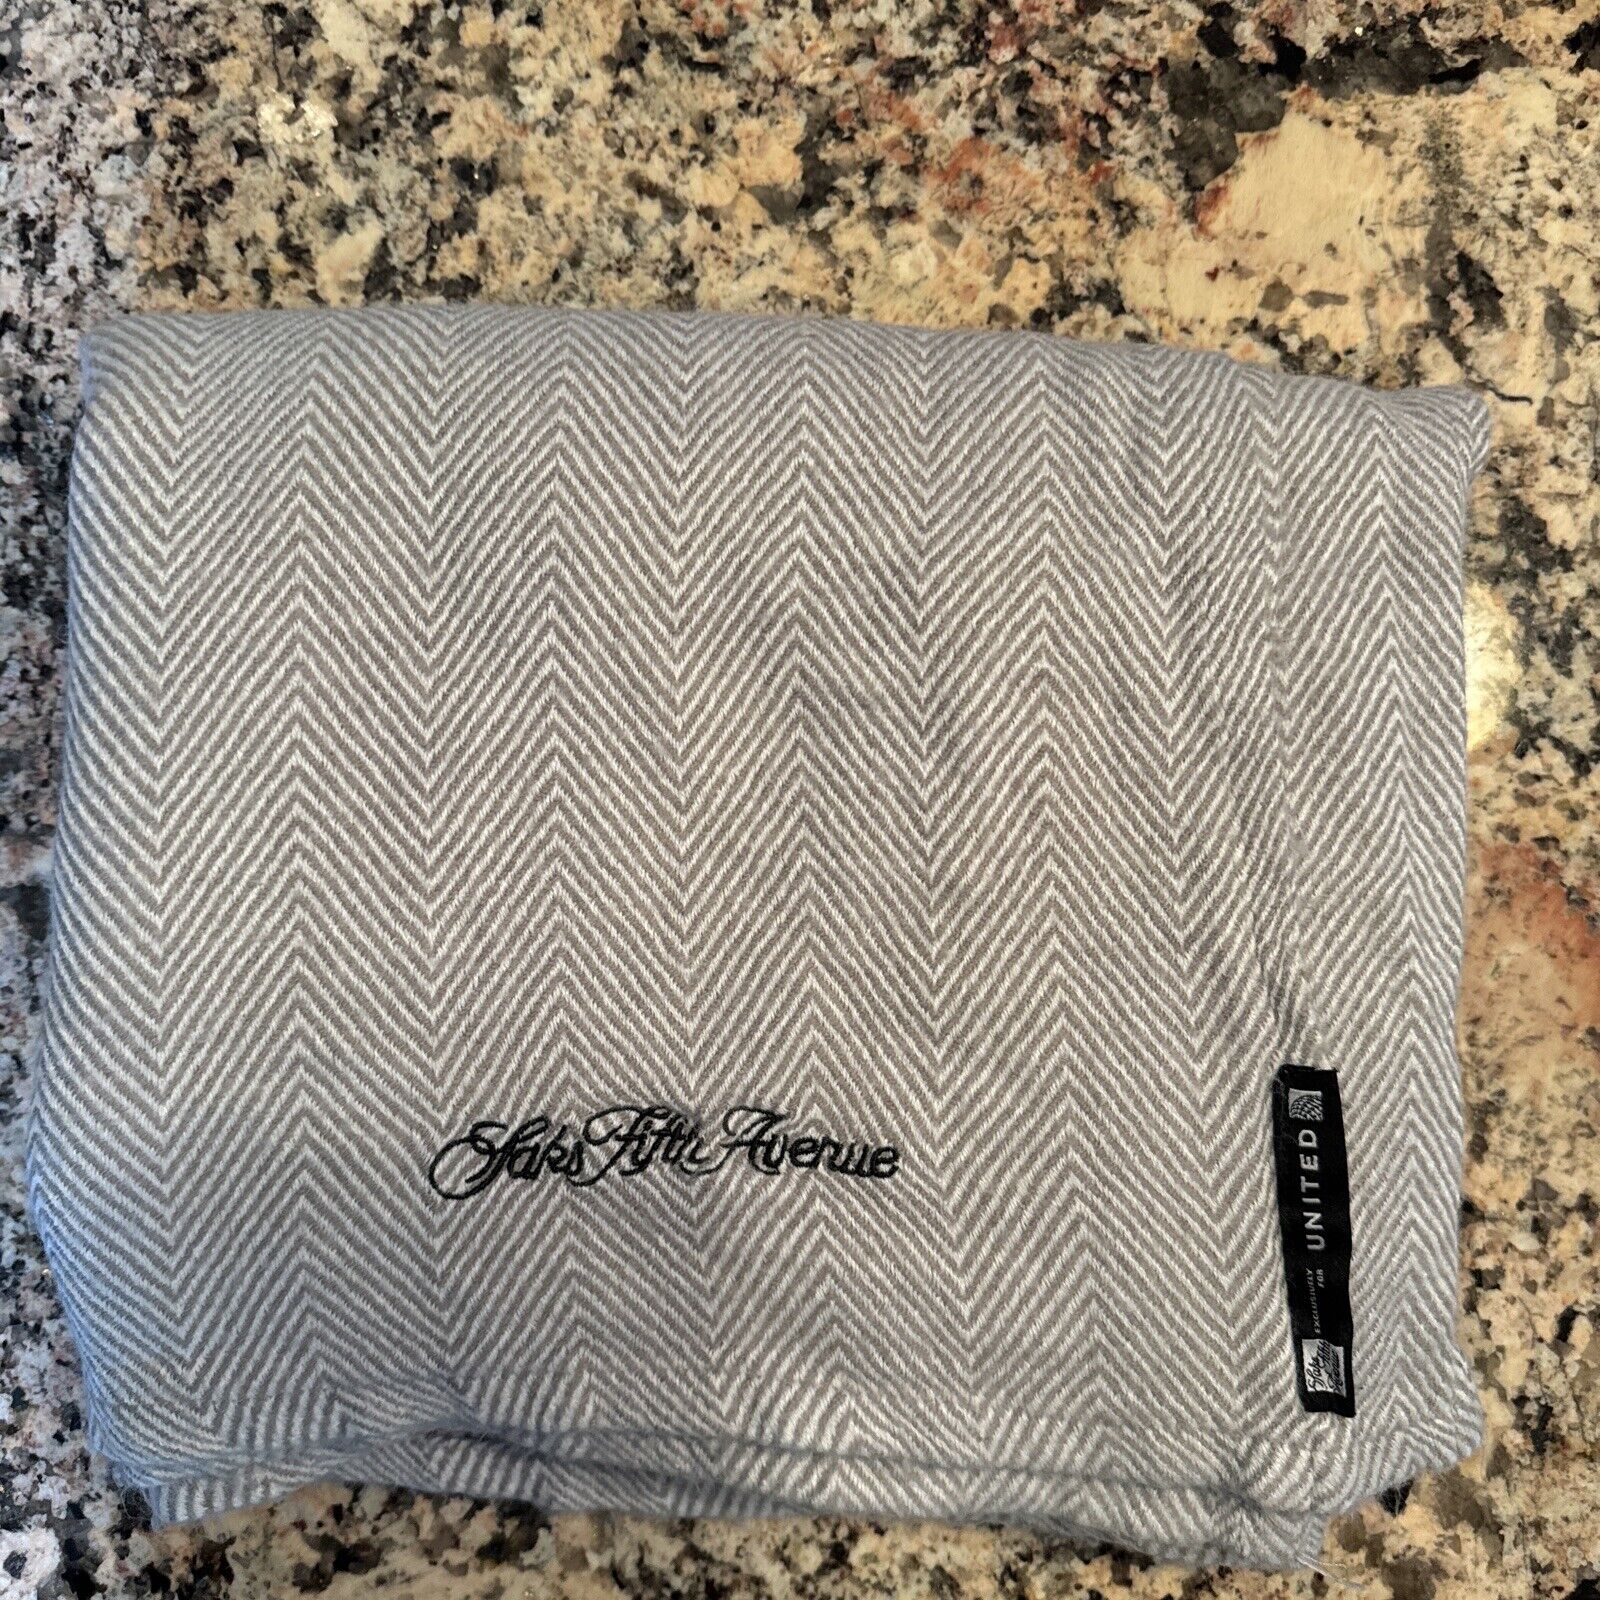 Saks Fifth Avenue United Airlines Knit Travel Blanket Gray Herringbone 51 x 58